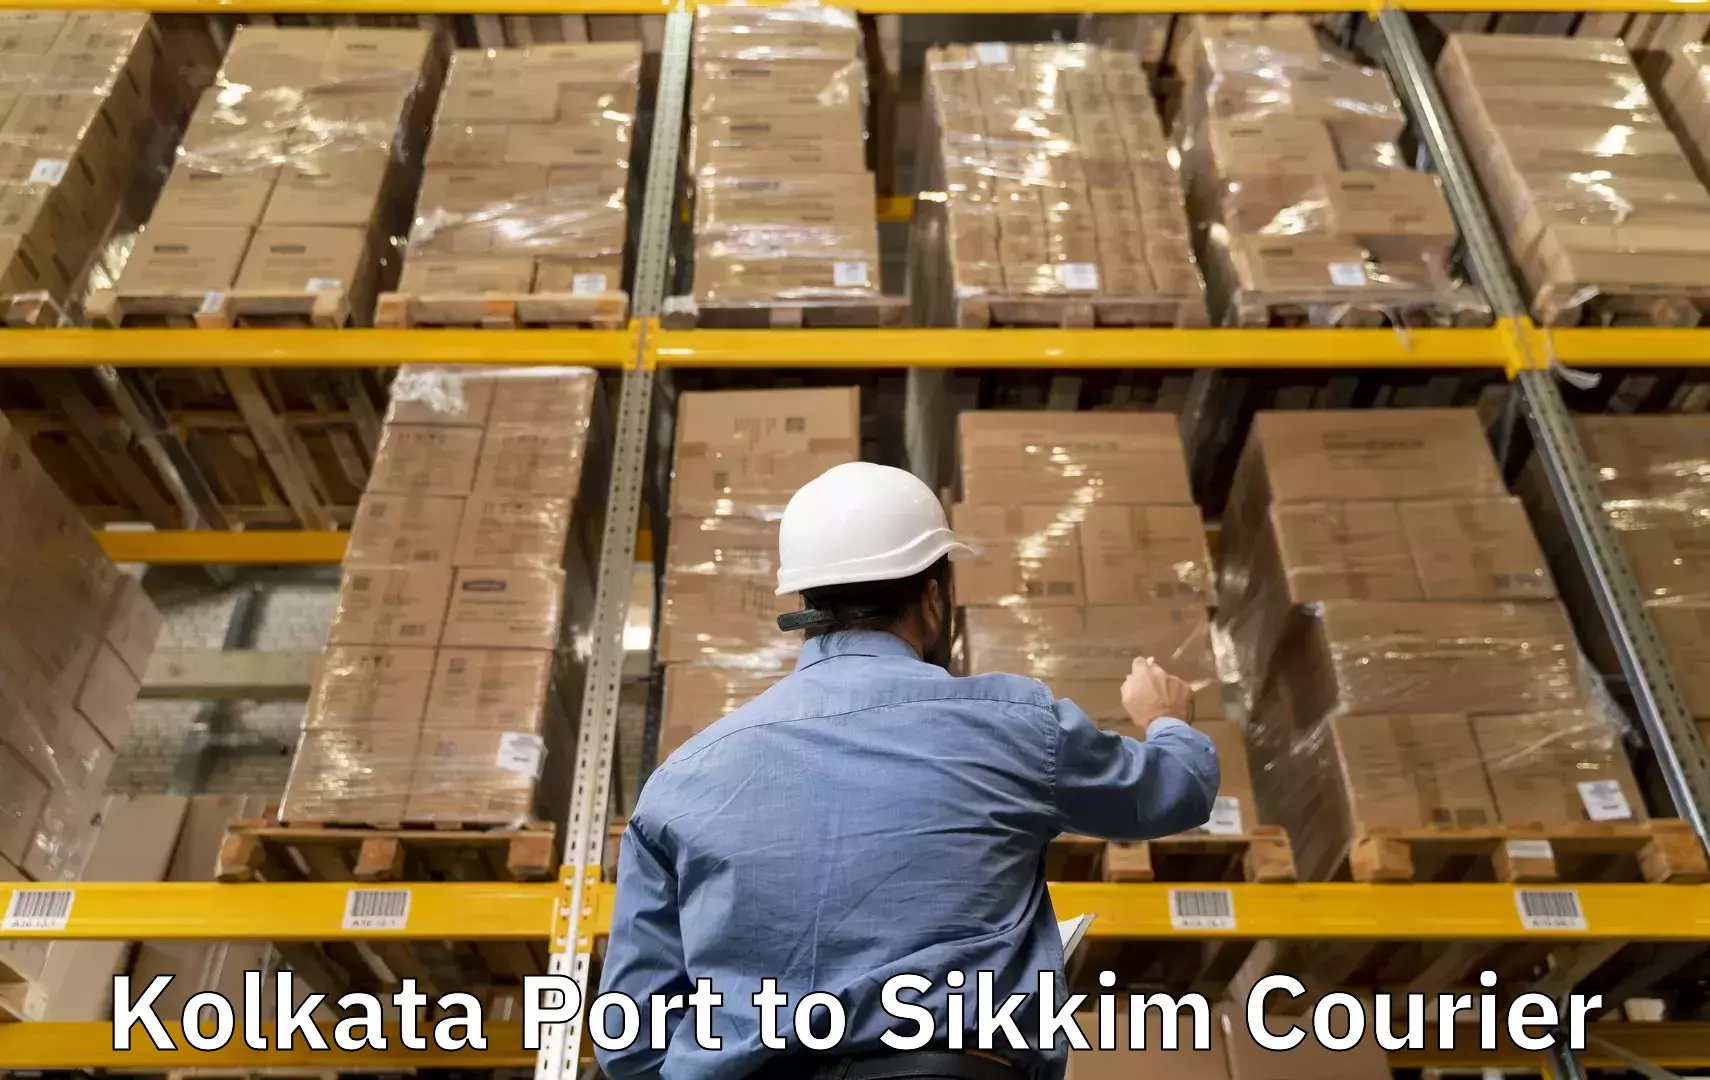 Luggage transfer service Kolkata Port to West Sikkim